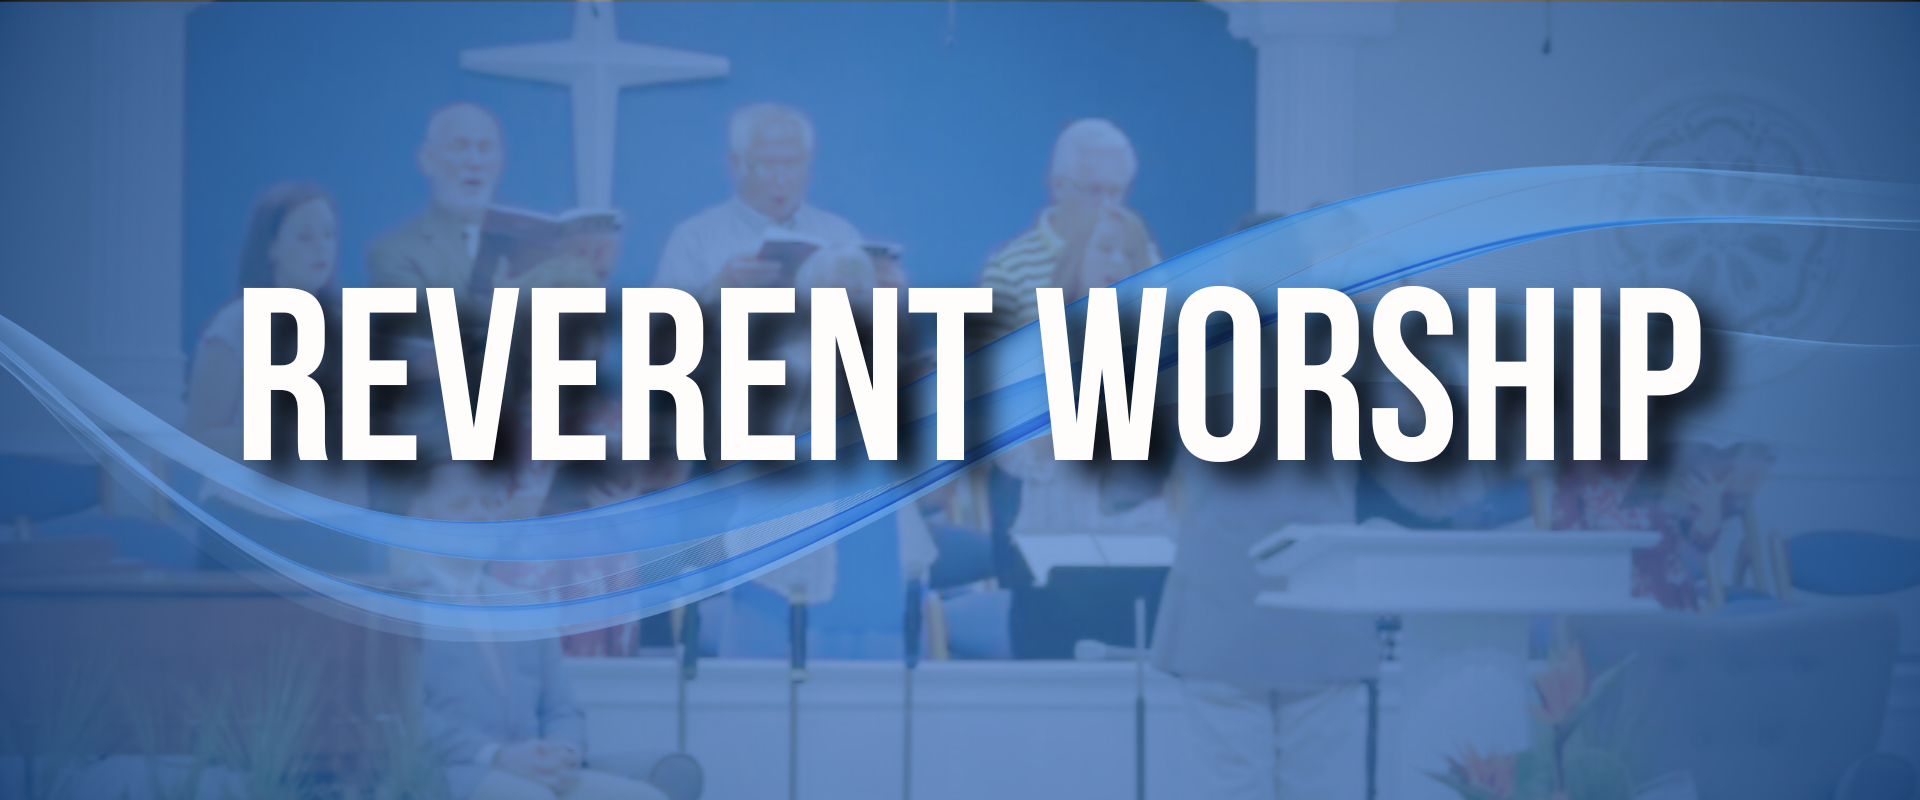 Reverent Worship | Bible Baptist Church of Fort Pierce, FL